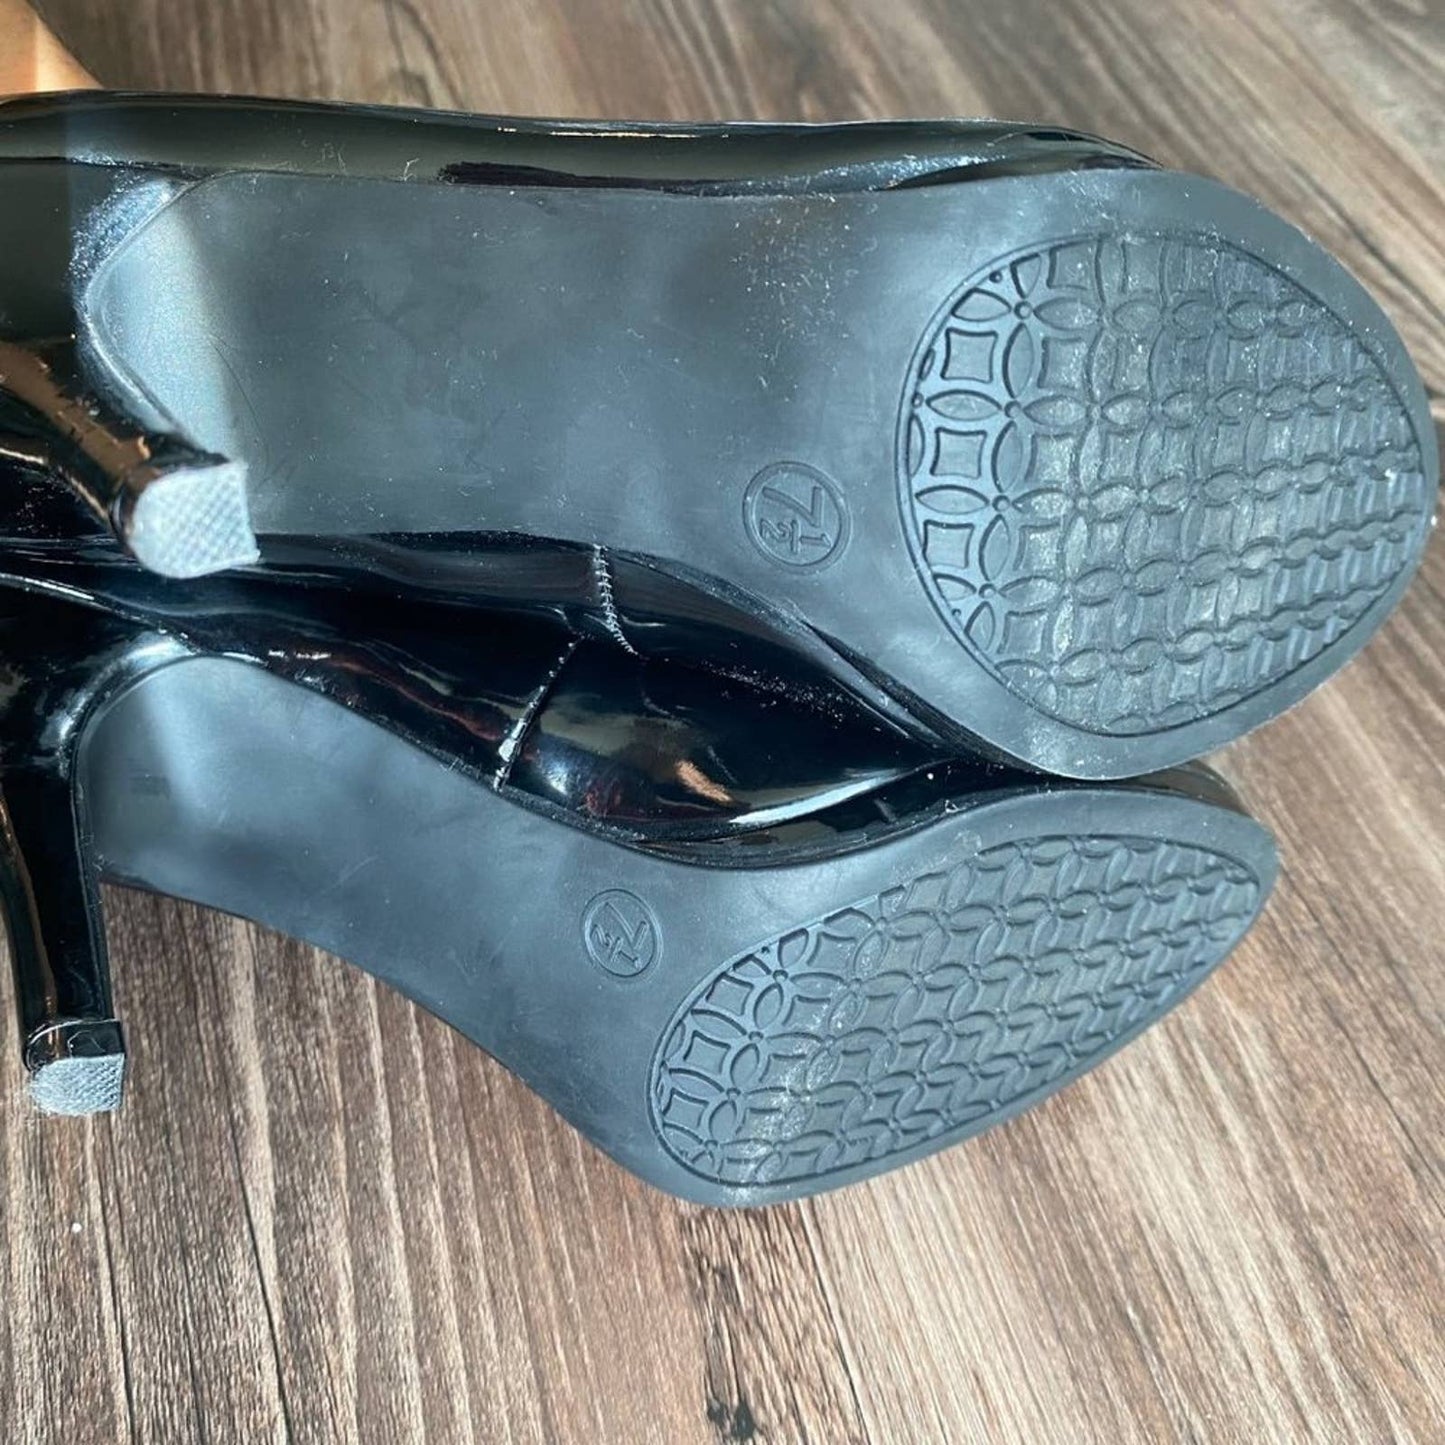 Merona sz 7.5  patton leather pumps 3-inch heels